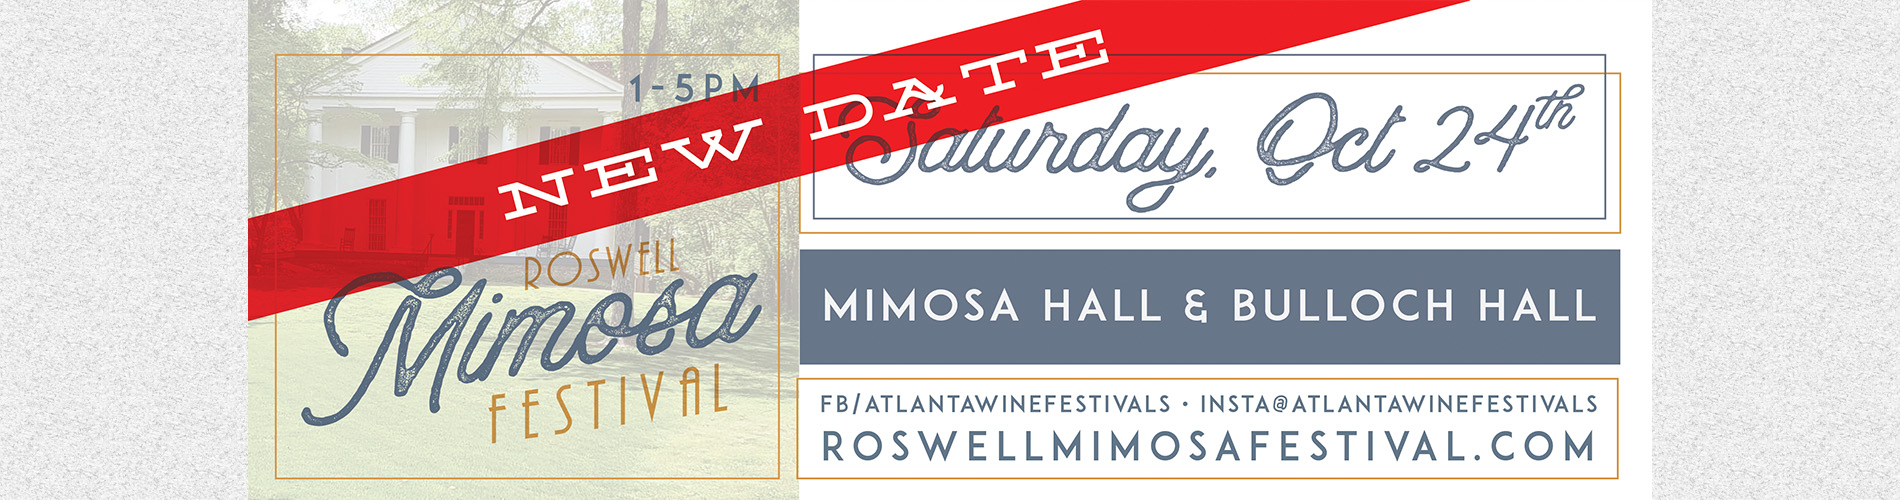 Roswell Mimosa Atlanta Wine Festivals